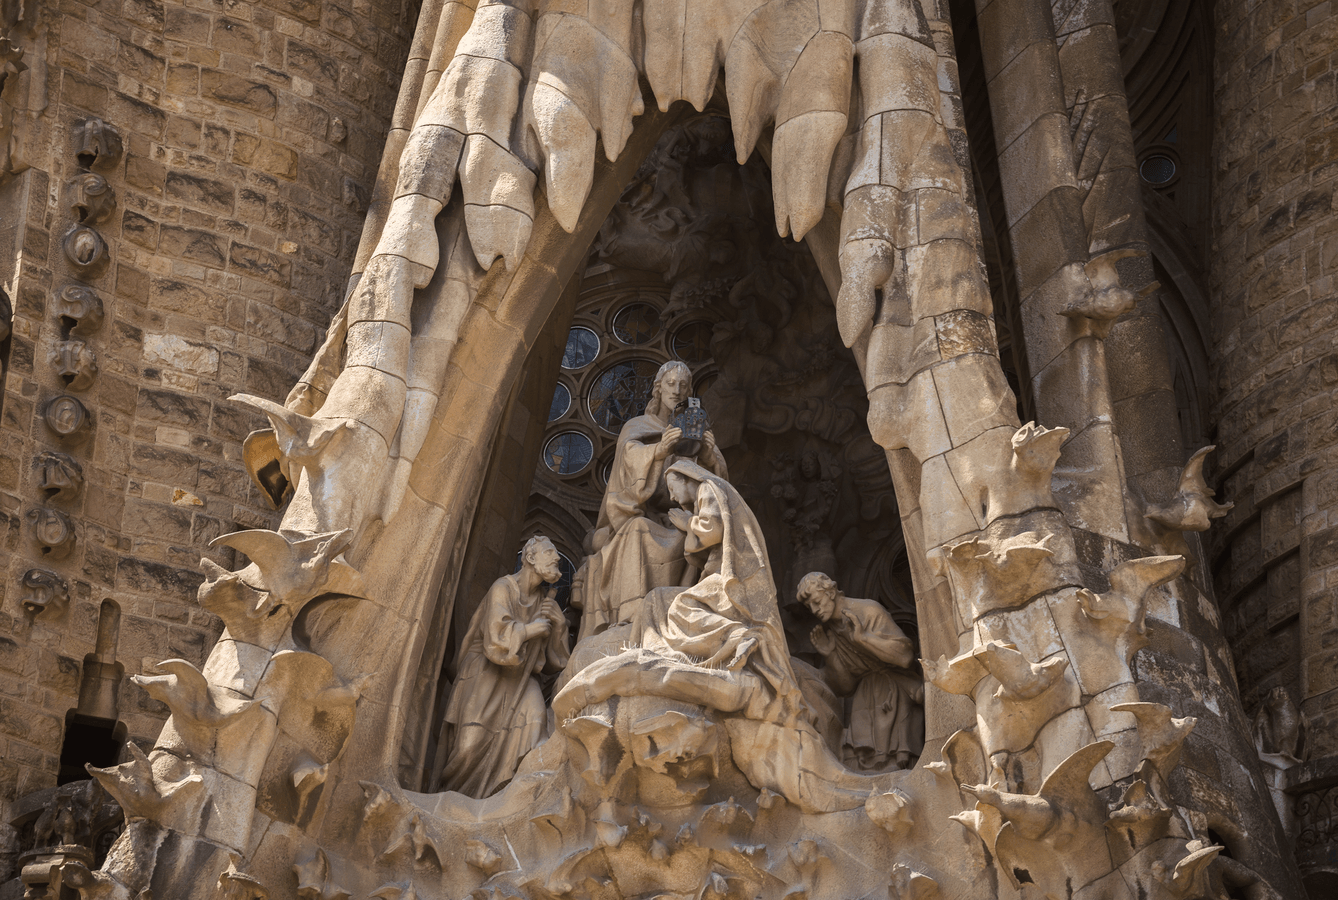 Sagrada Familia by Gaudi - Basilica in Barcelona, Spain - 137 Year Project 98